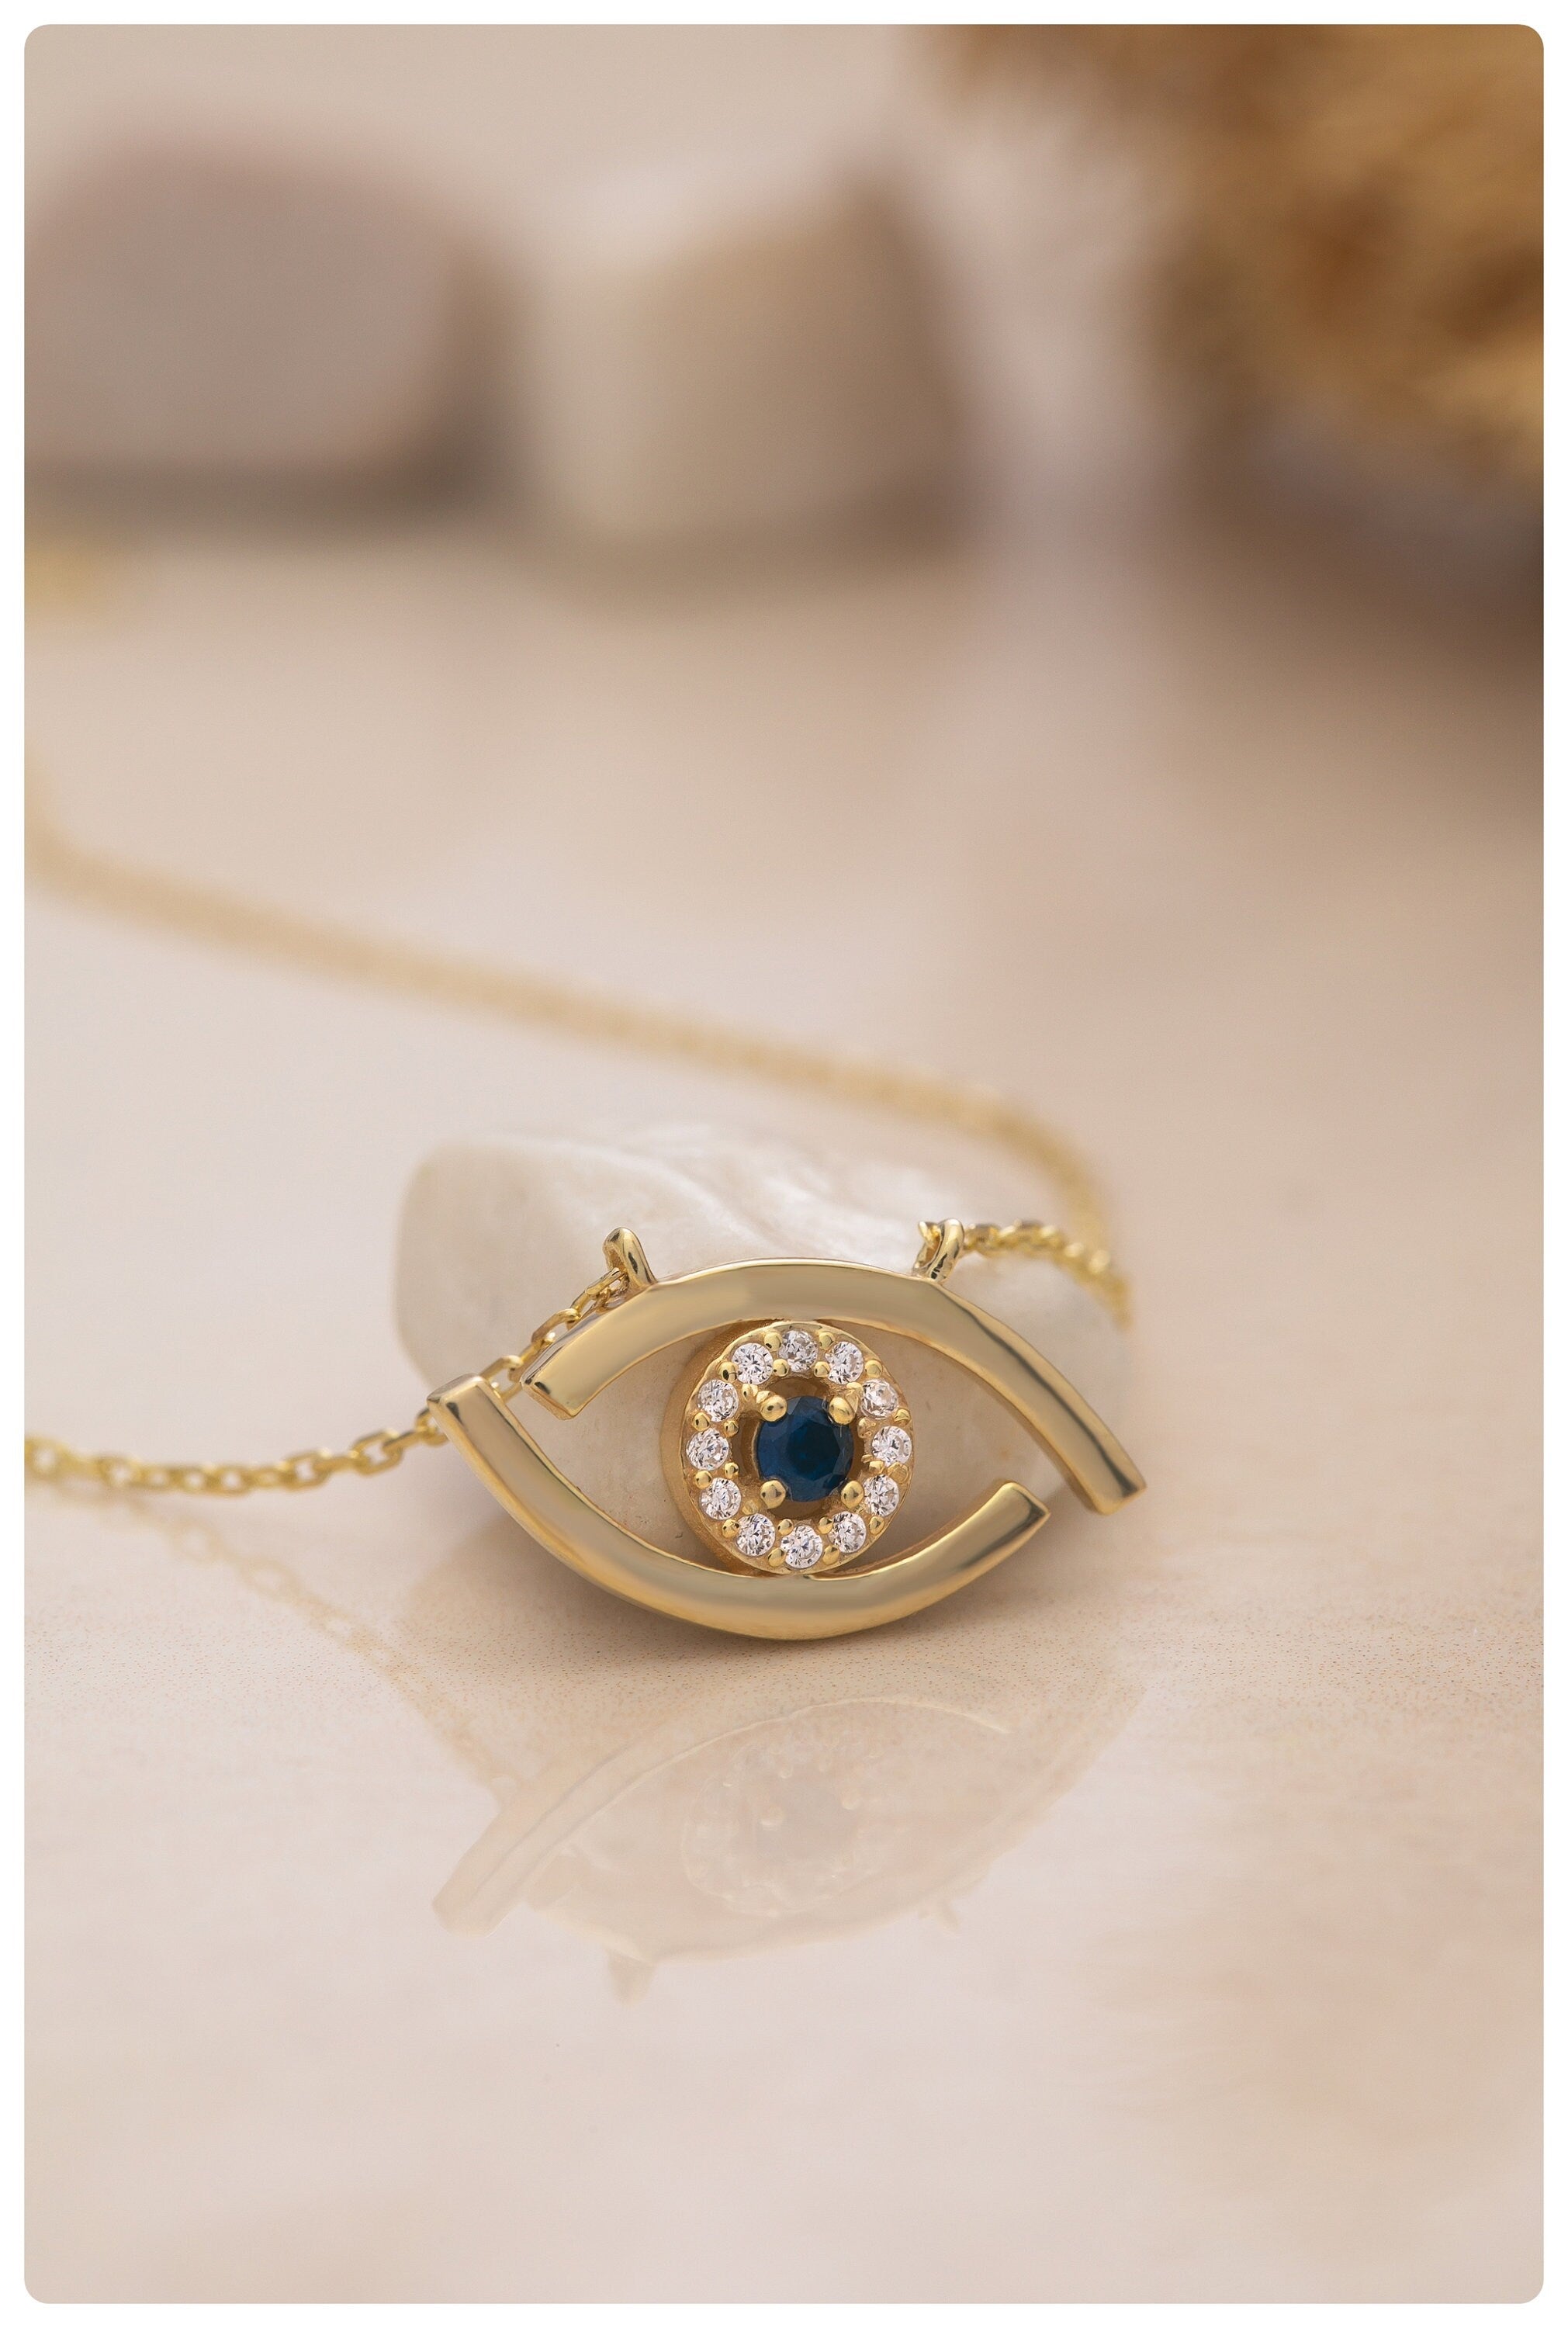 14k Gold Evil Eyes Necklace, Initial Evil Eye Necklace, Protection Necklace, 925 Silver Evil Eye Necklace, Birthday Gift for Her, Gift Idea